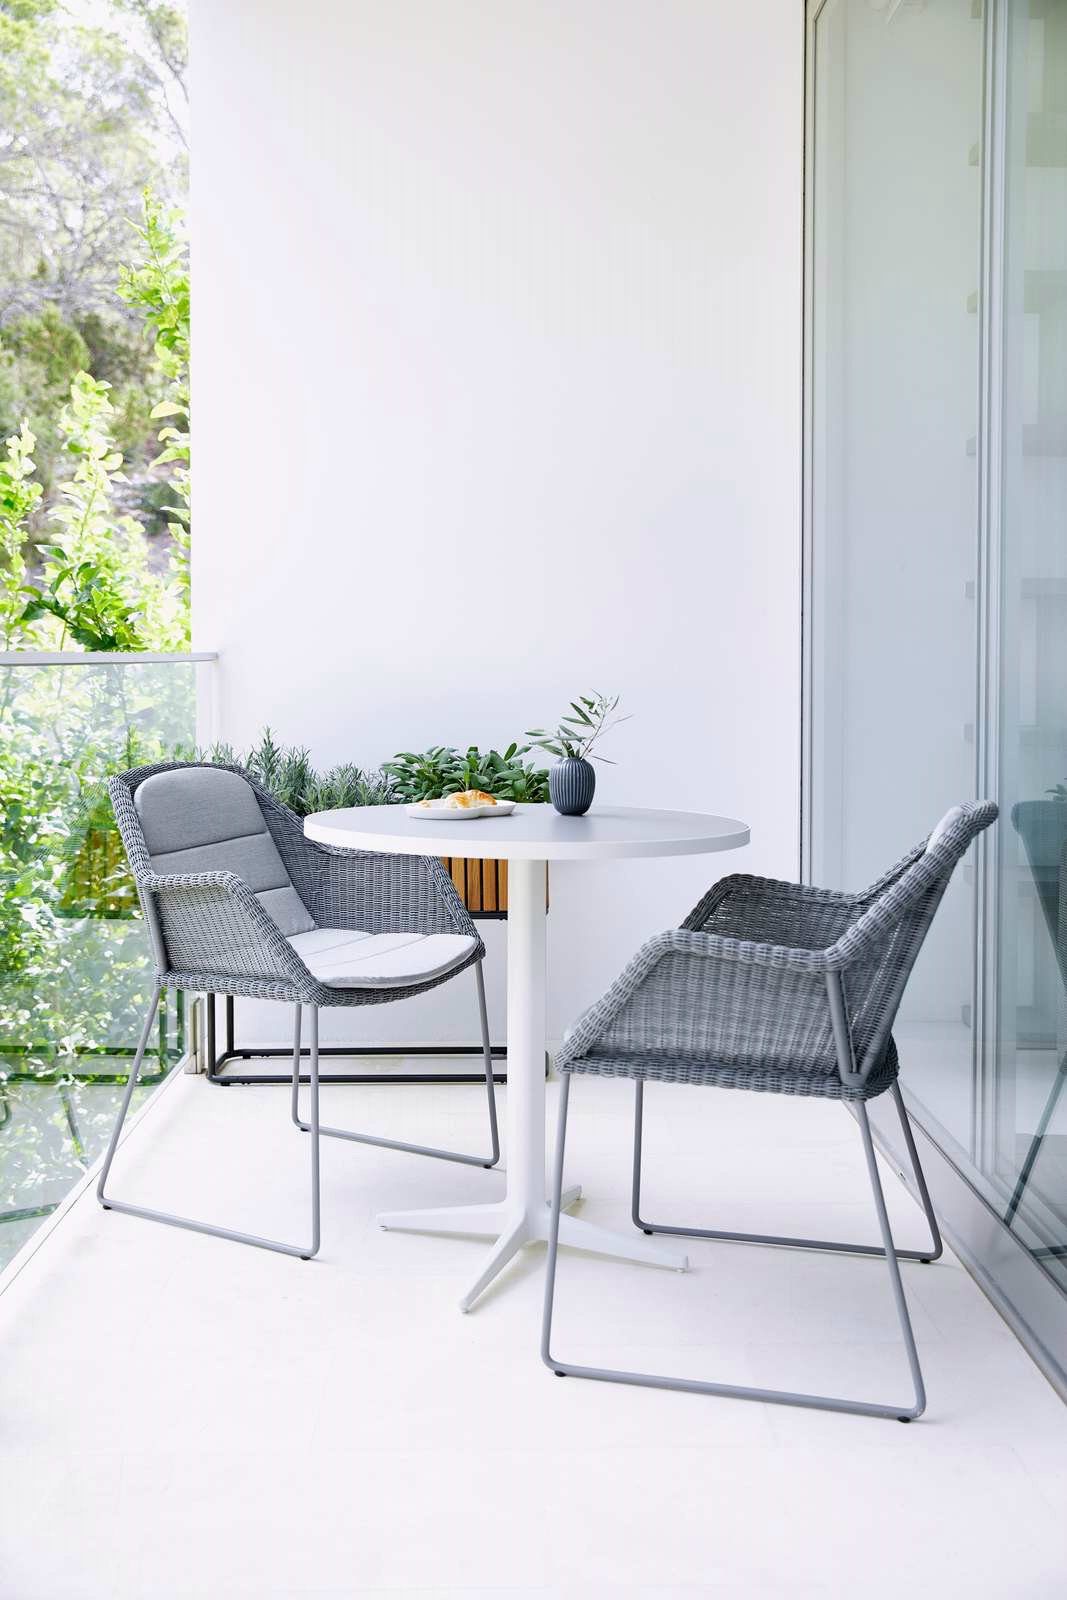 Cane-line "Breeze" Gartenstuhl, Geflecht hellgrau mit Bistrotisch "Drop", Aluminium weiß, Keramikplatte